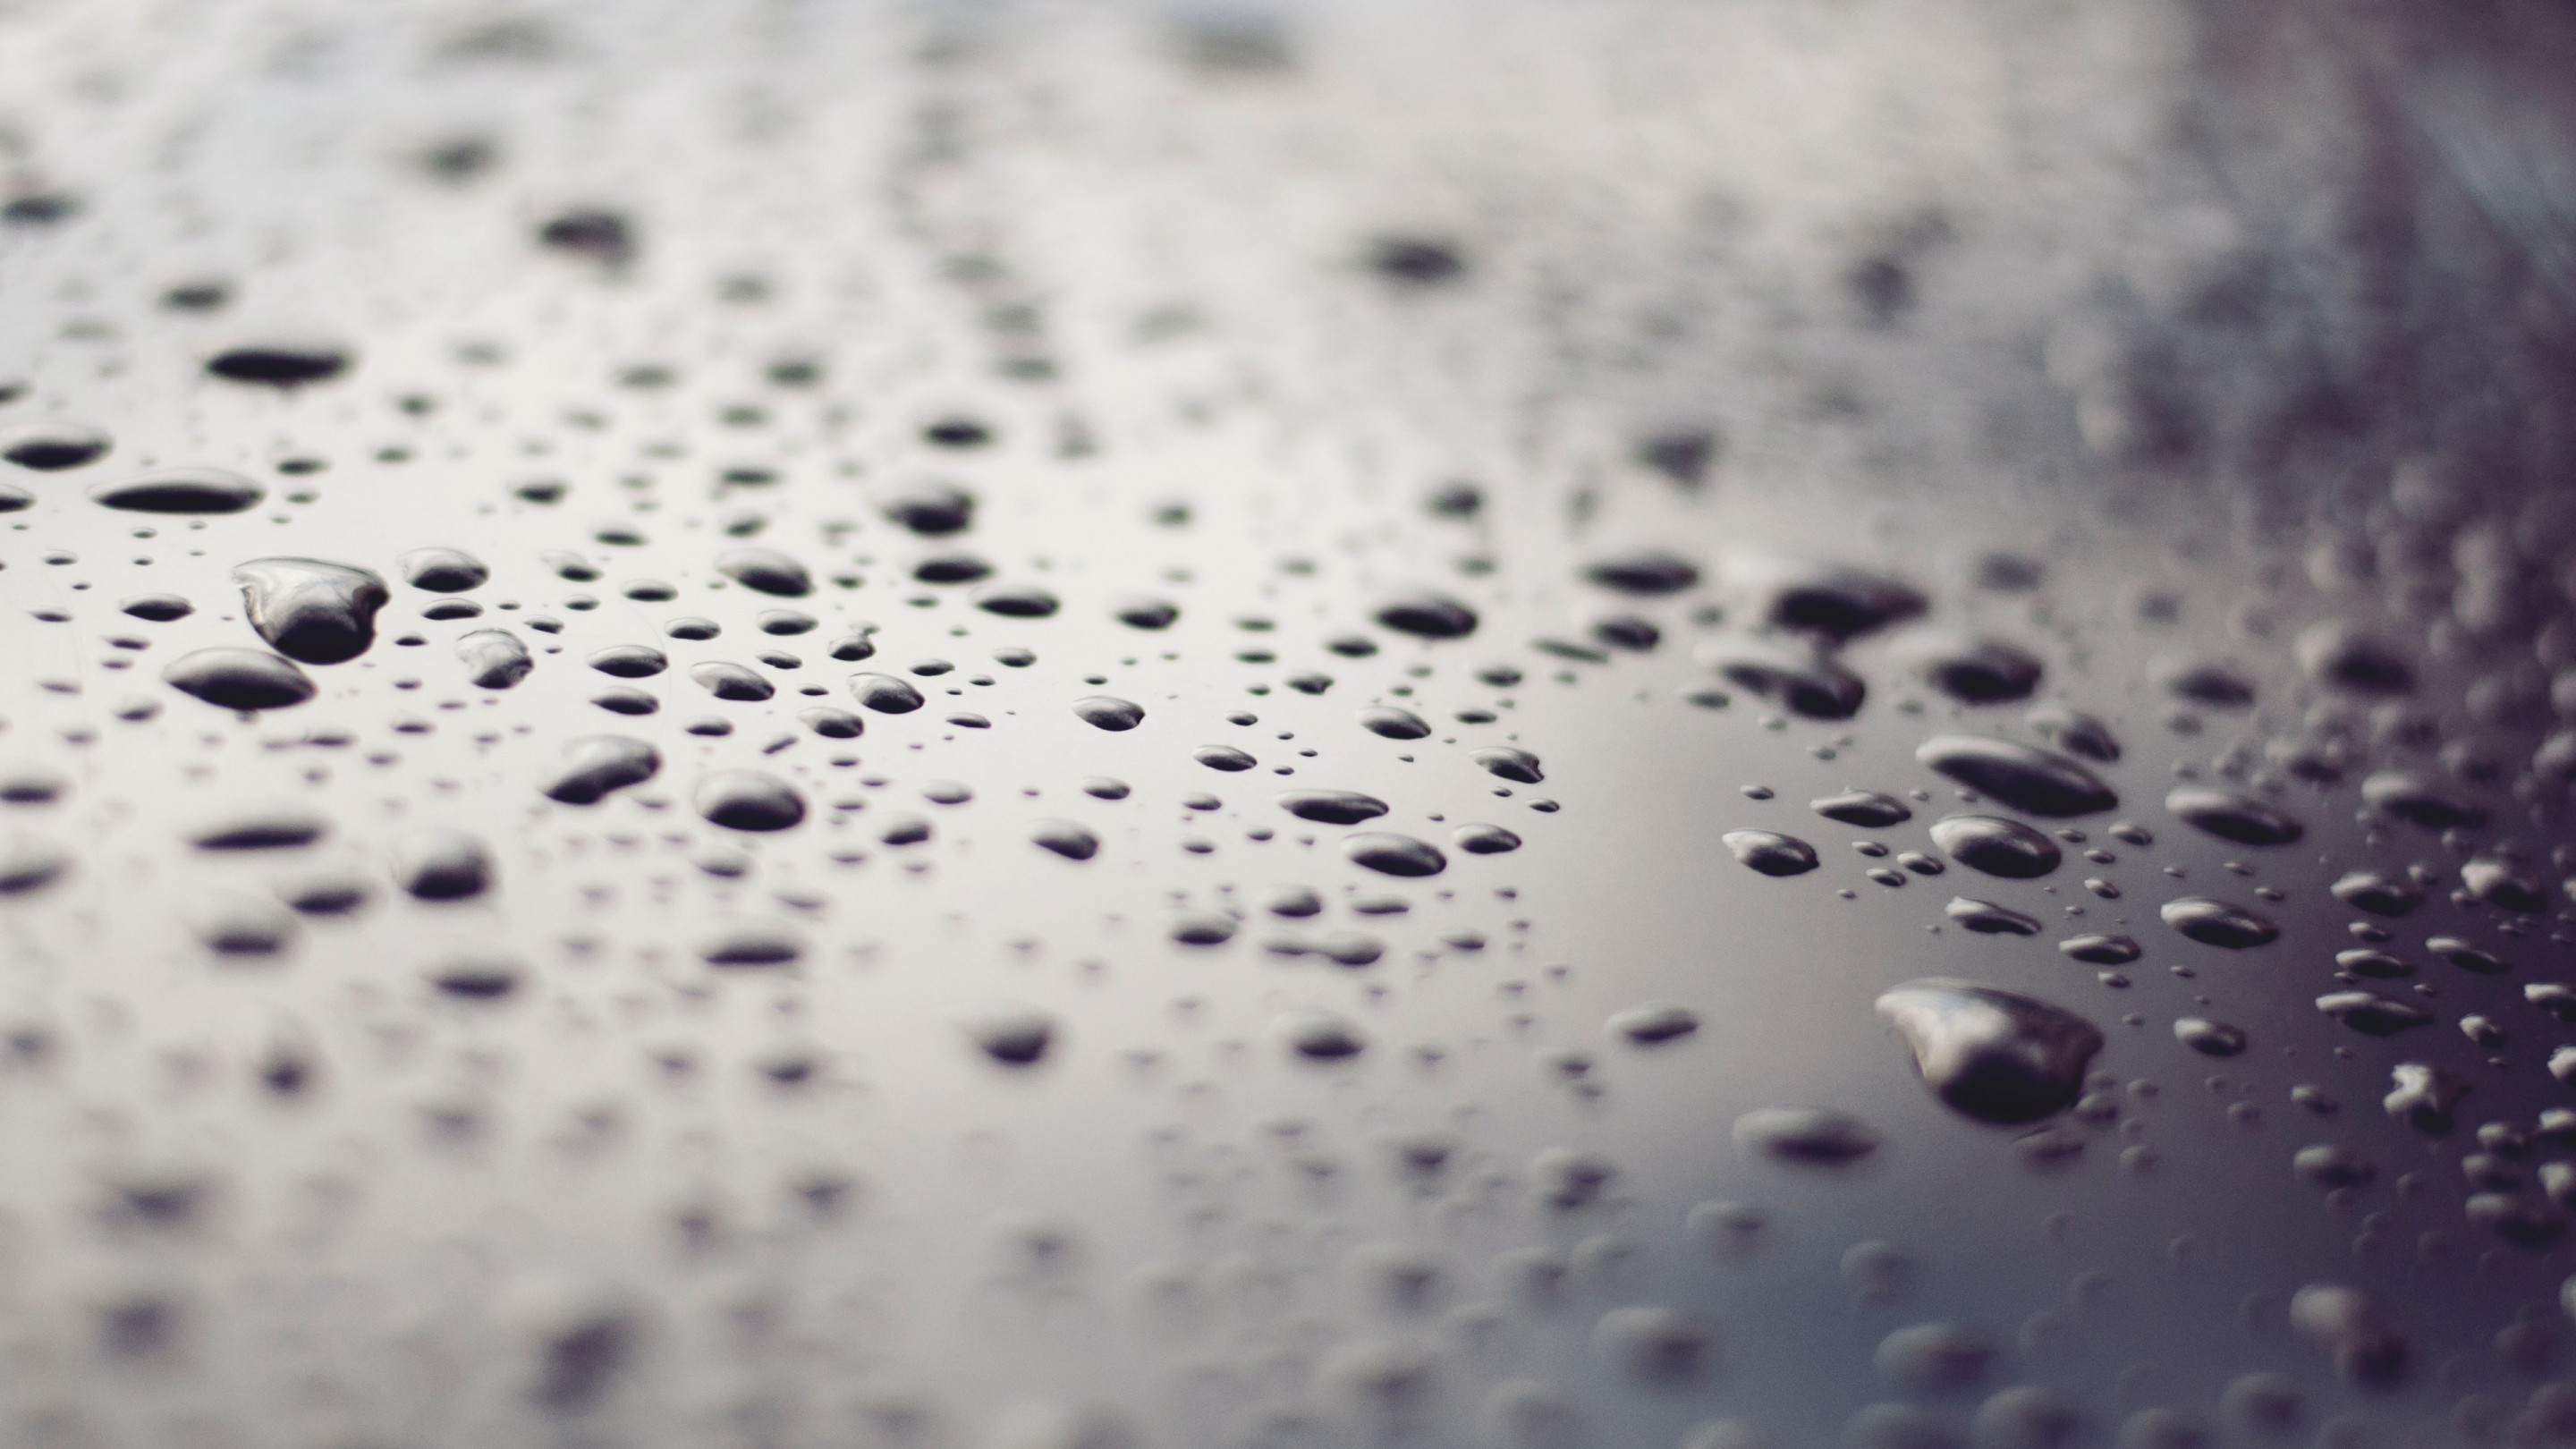 Raindrops on a metallic surface wallpaper 2880x1620